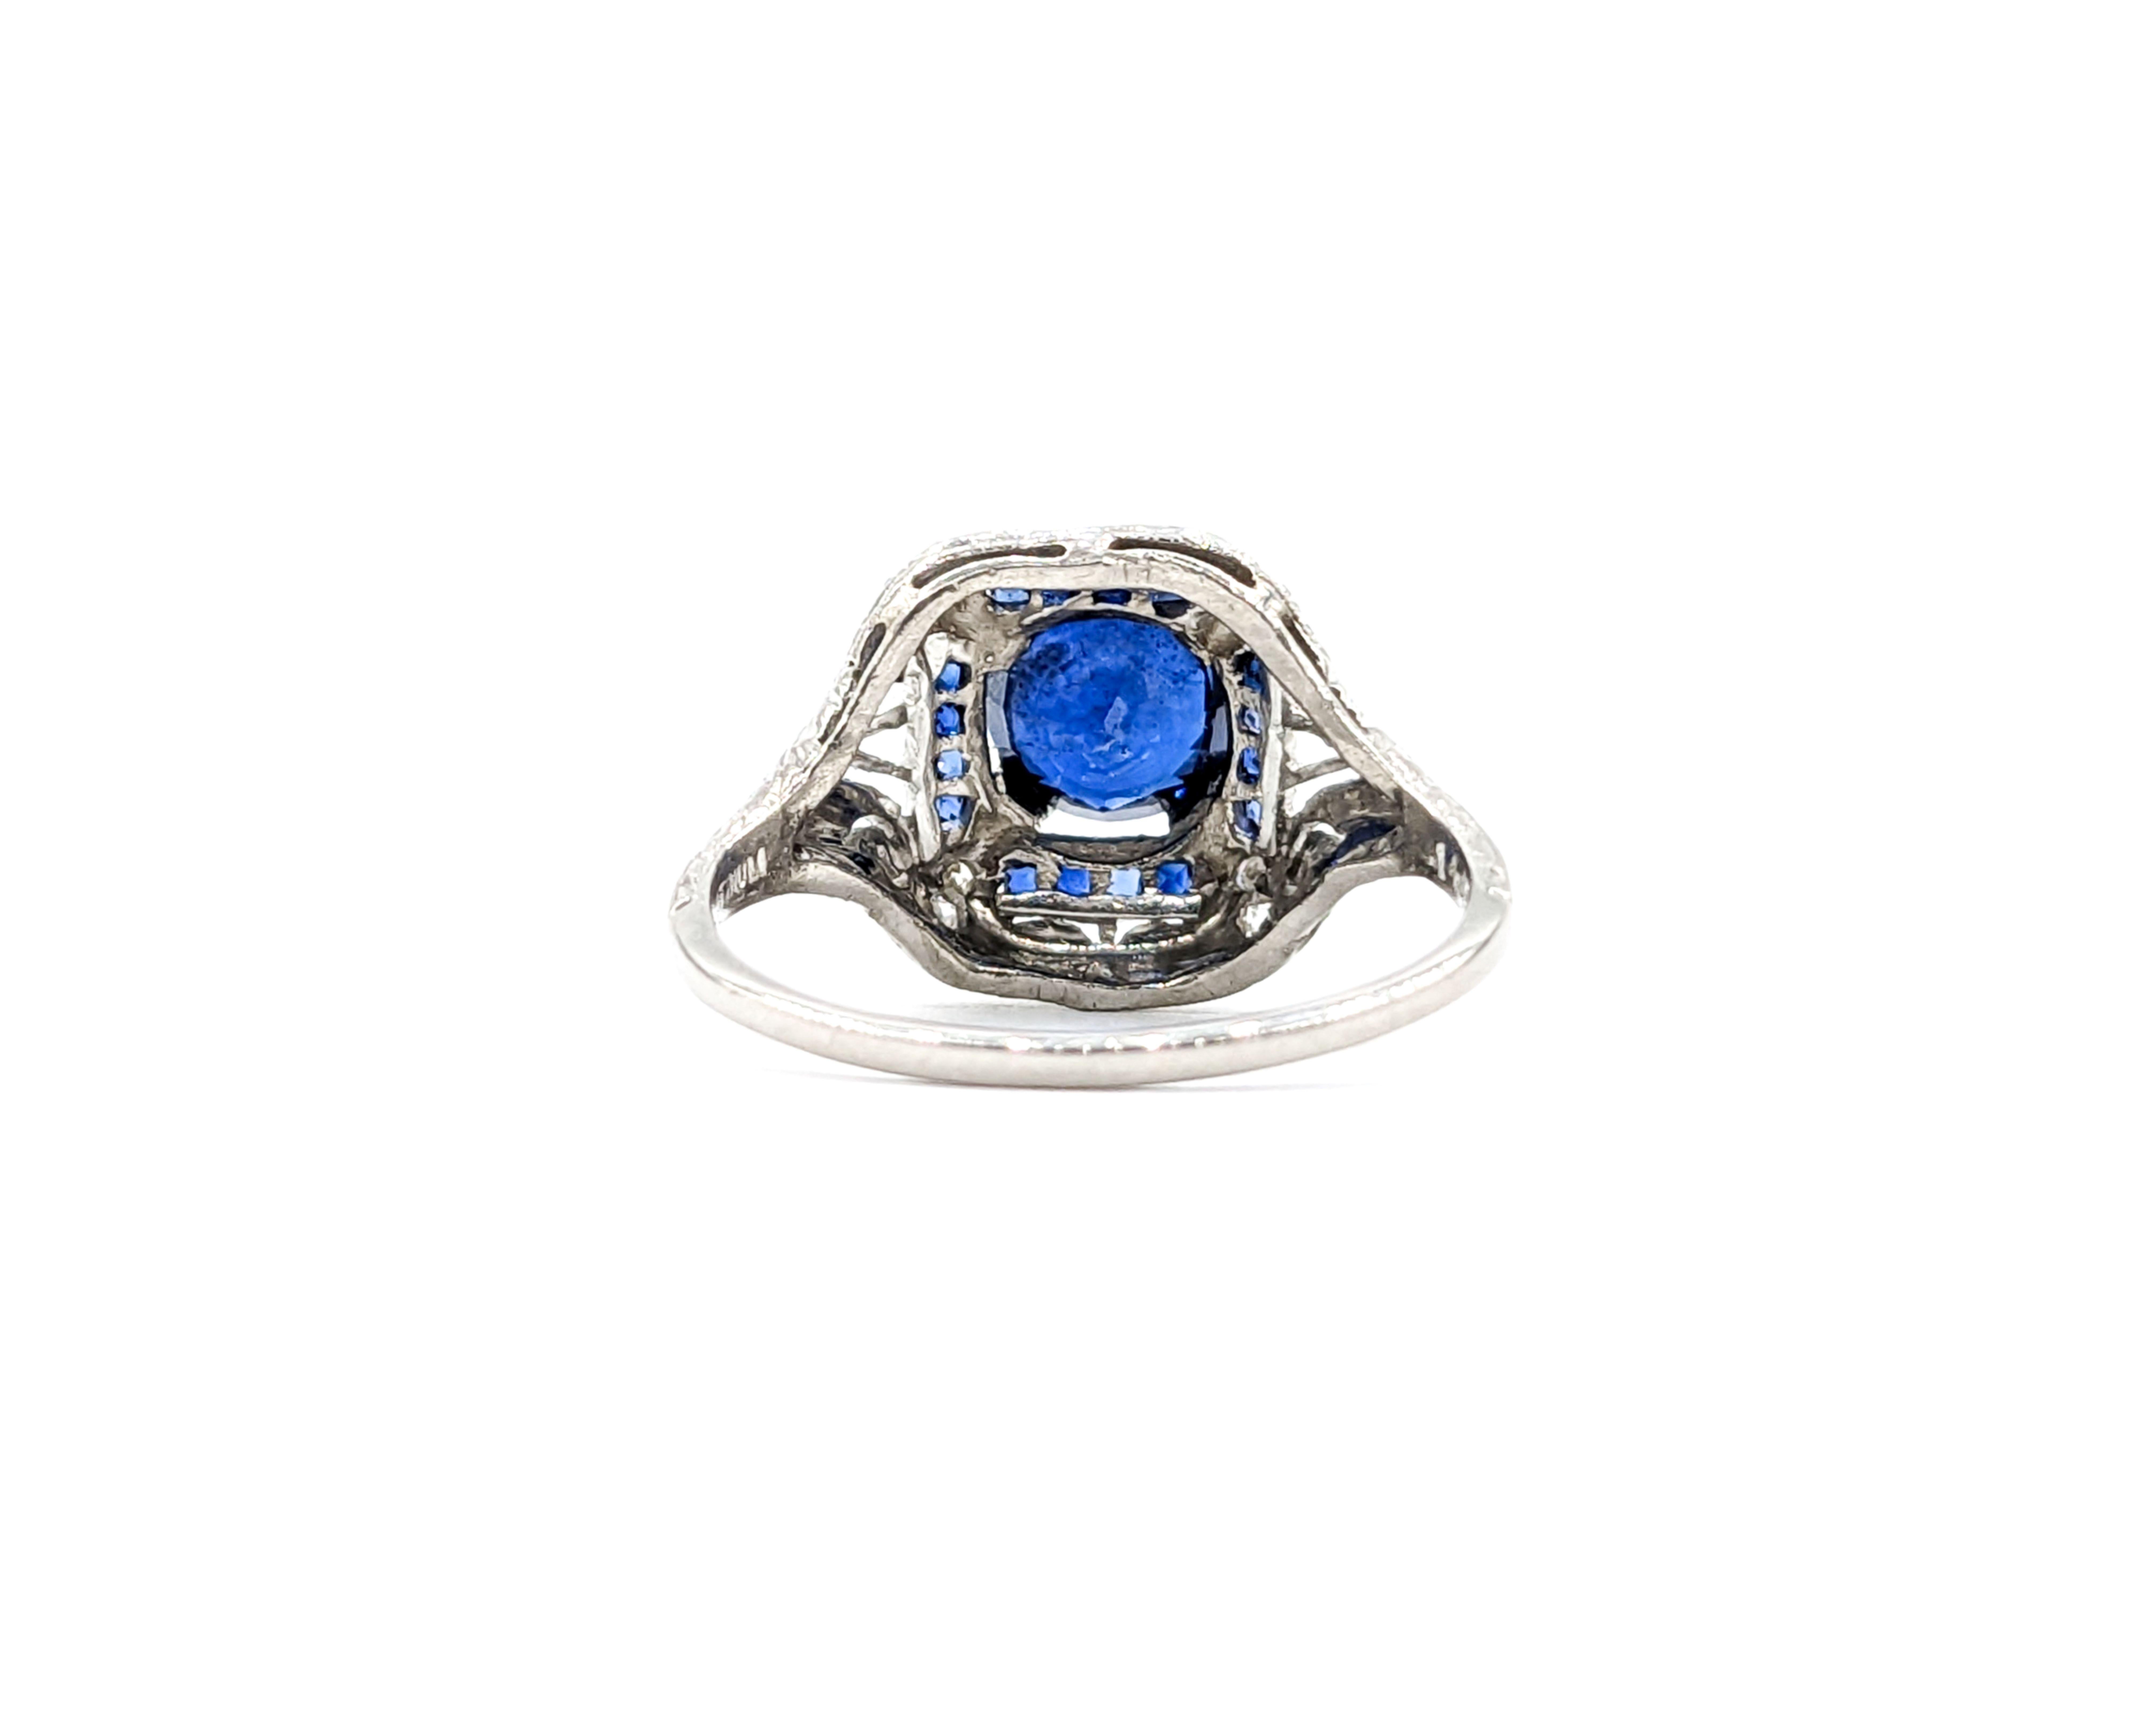 Fantastic Antique Art Deco Ring with Sapphire and Diamonds in Platinum Filigree 3